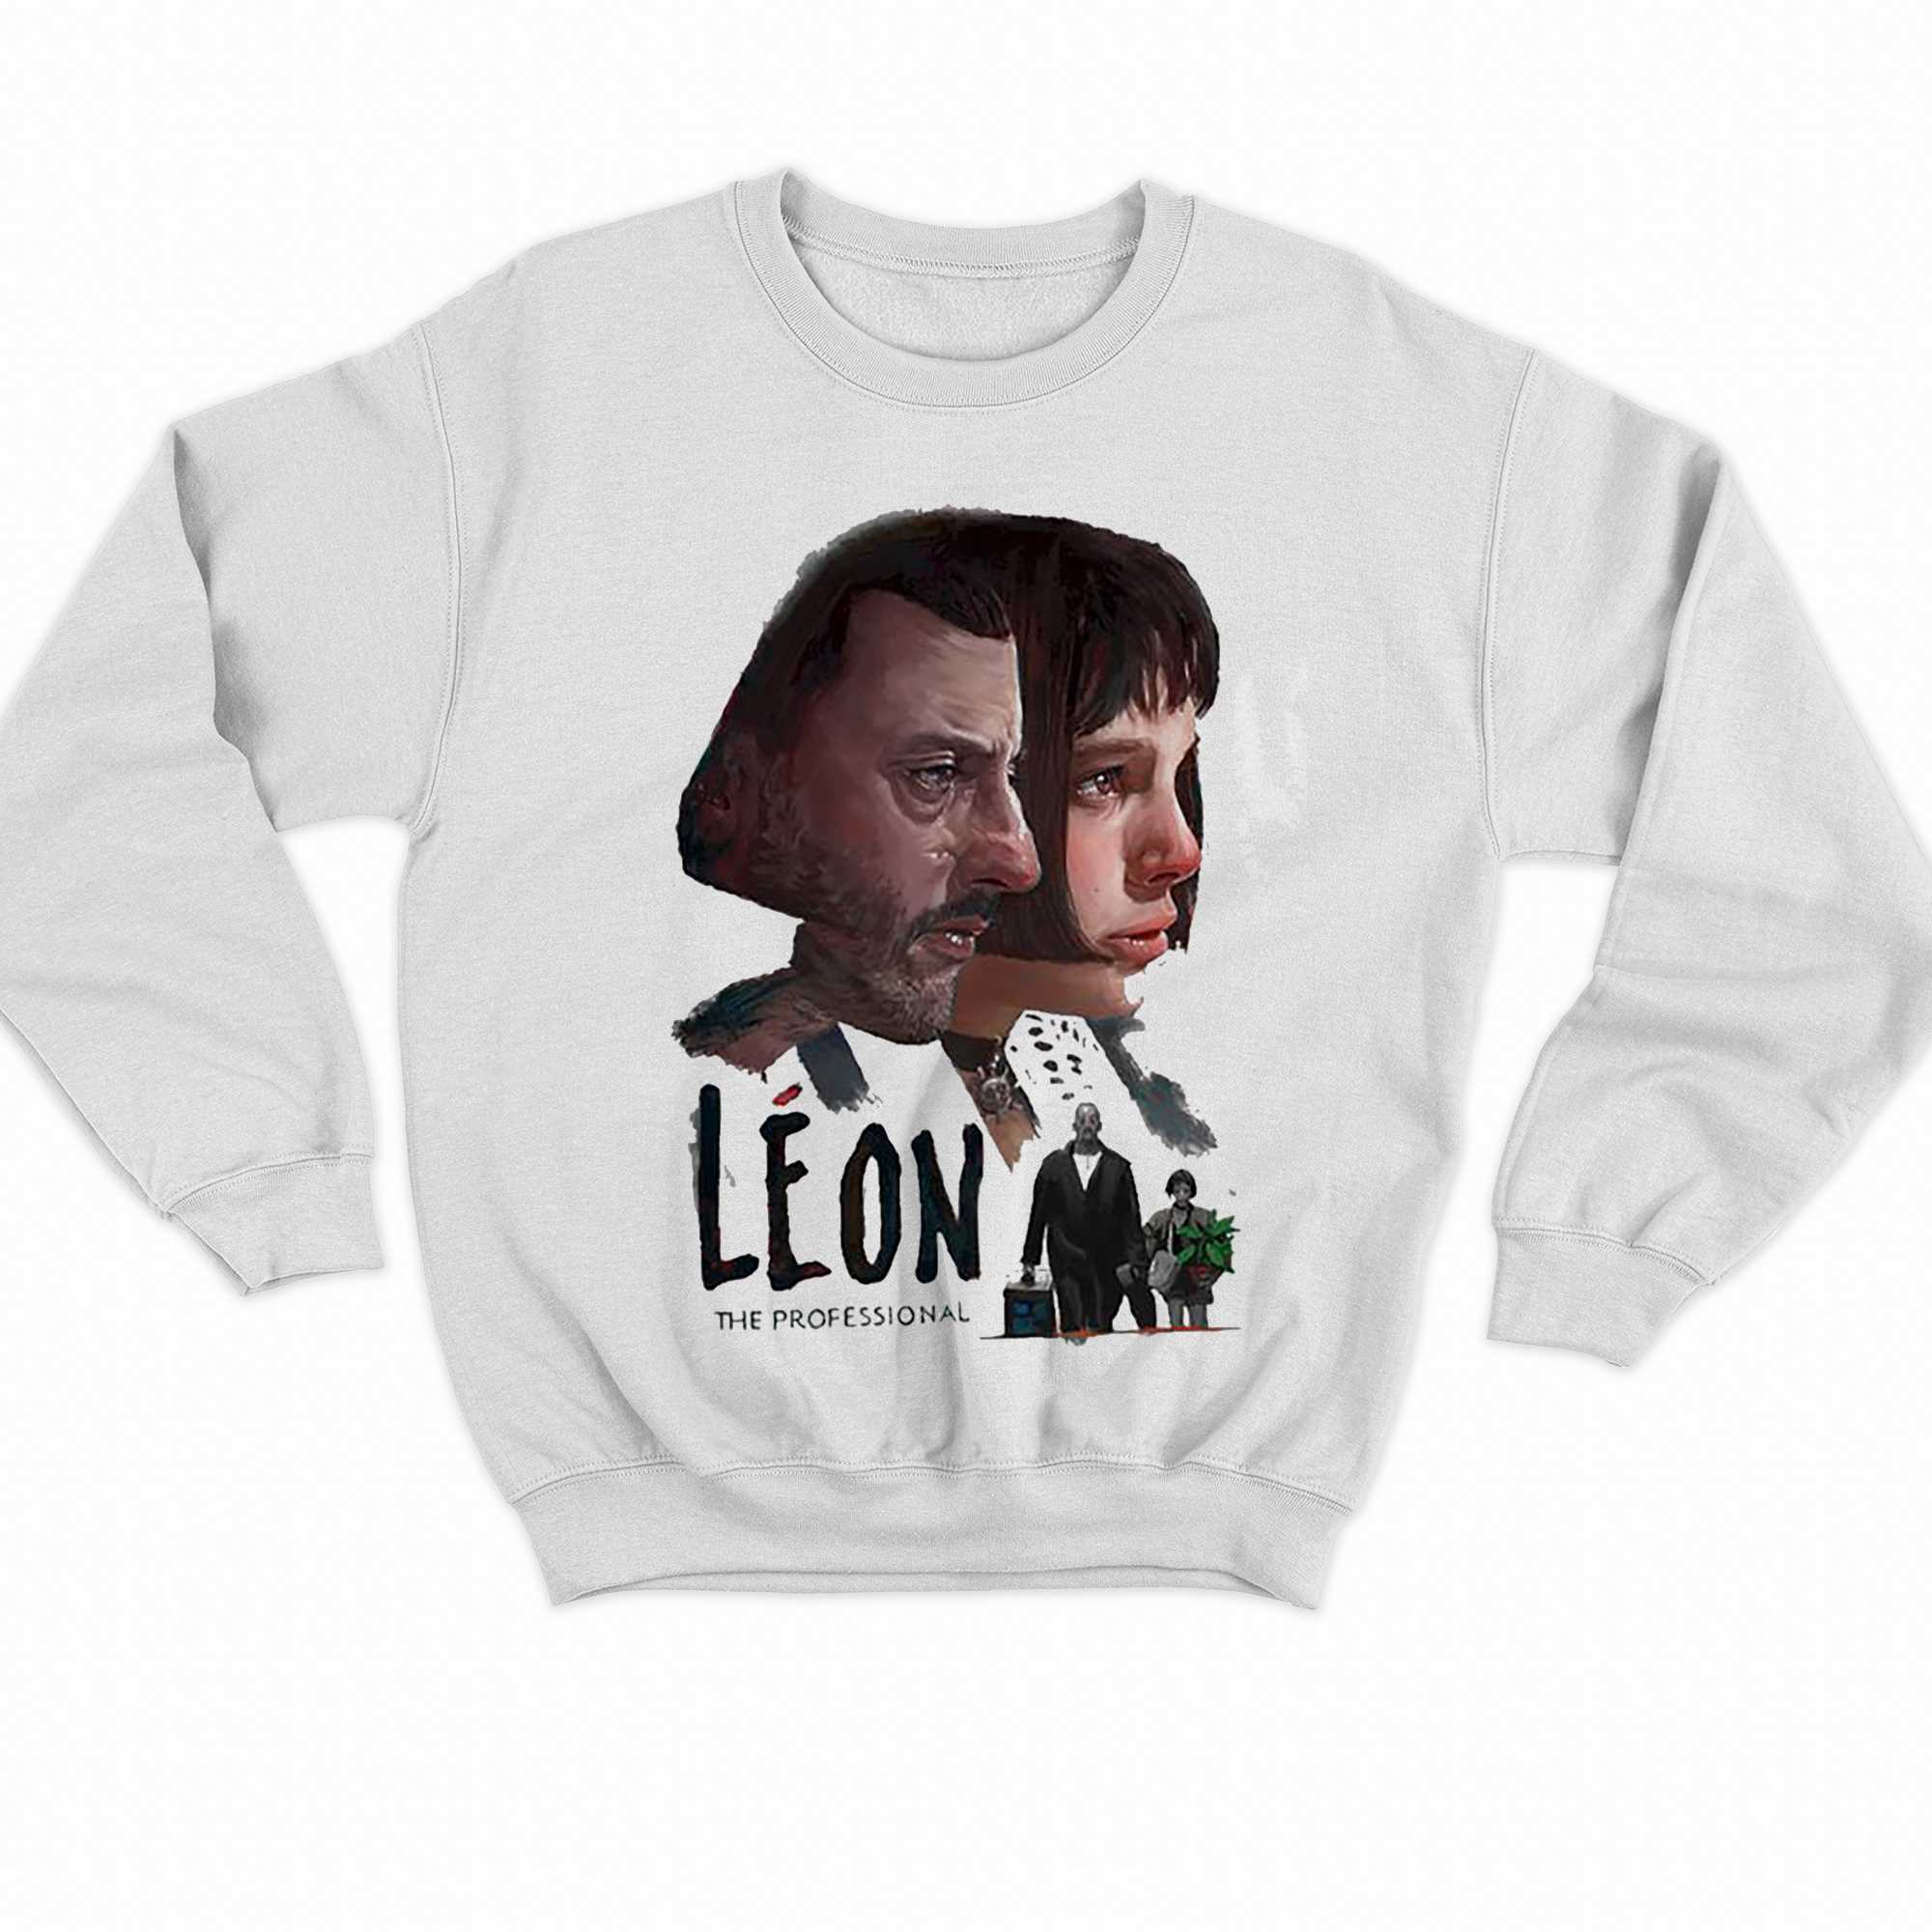 The Professional Leon Movie Assasin Shirt 